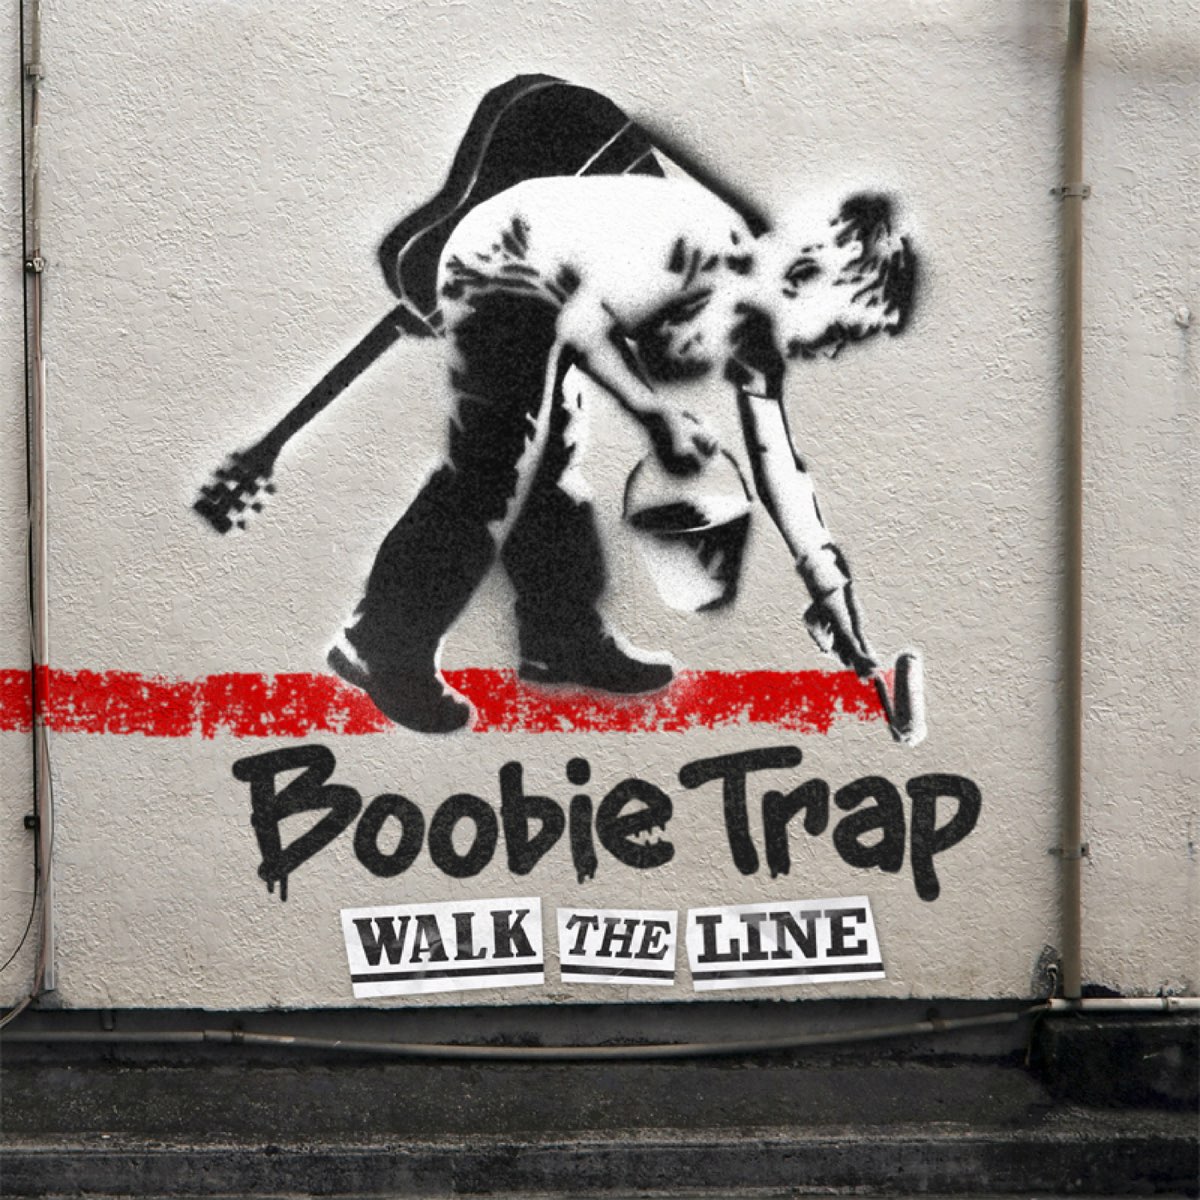 Booby trap. Boobie - Boobie Trap (1993). Poobie is coming.